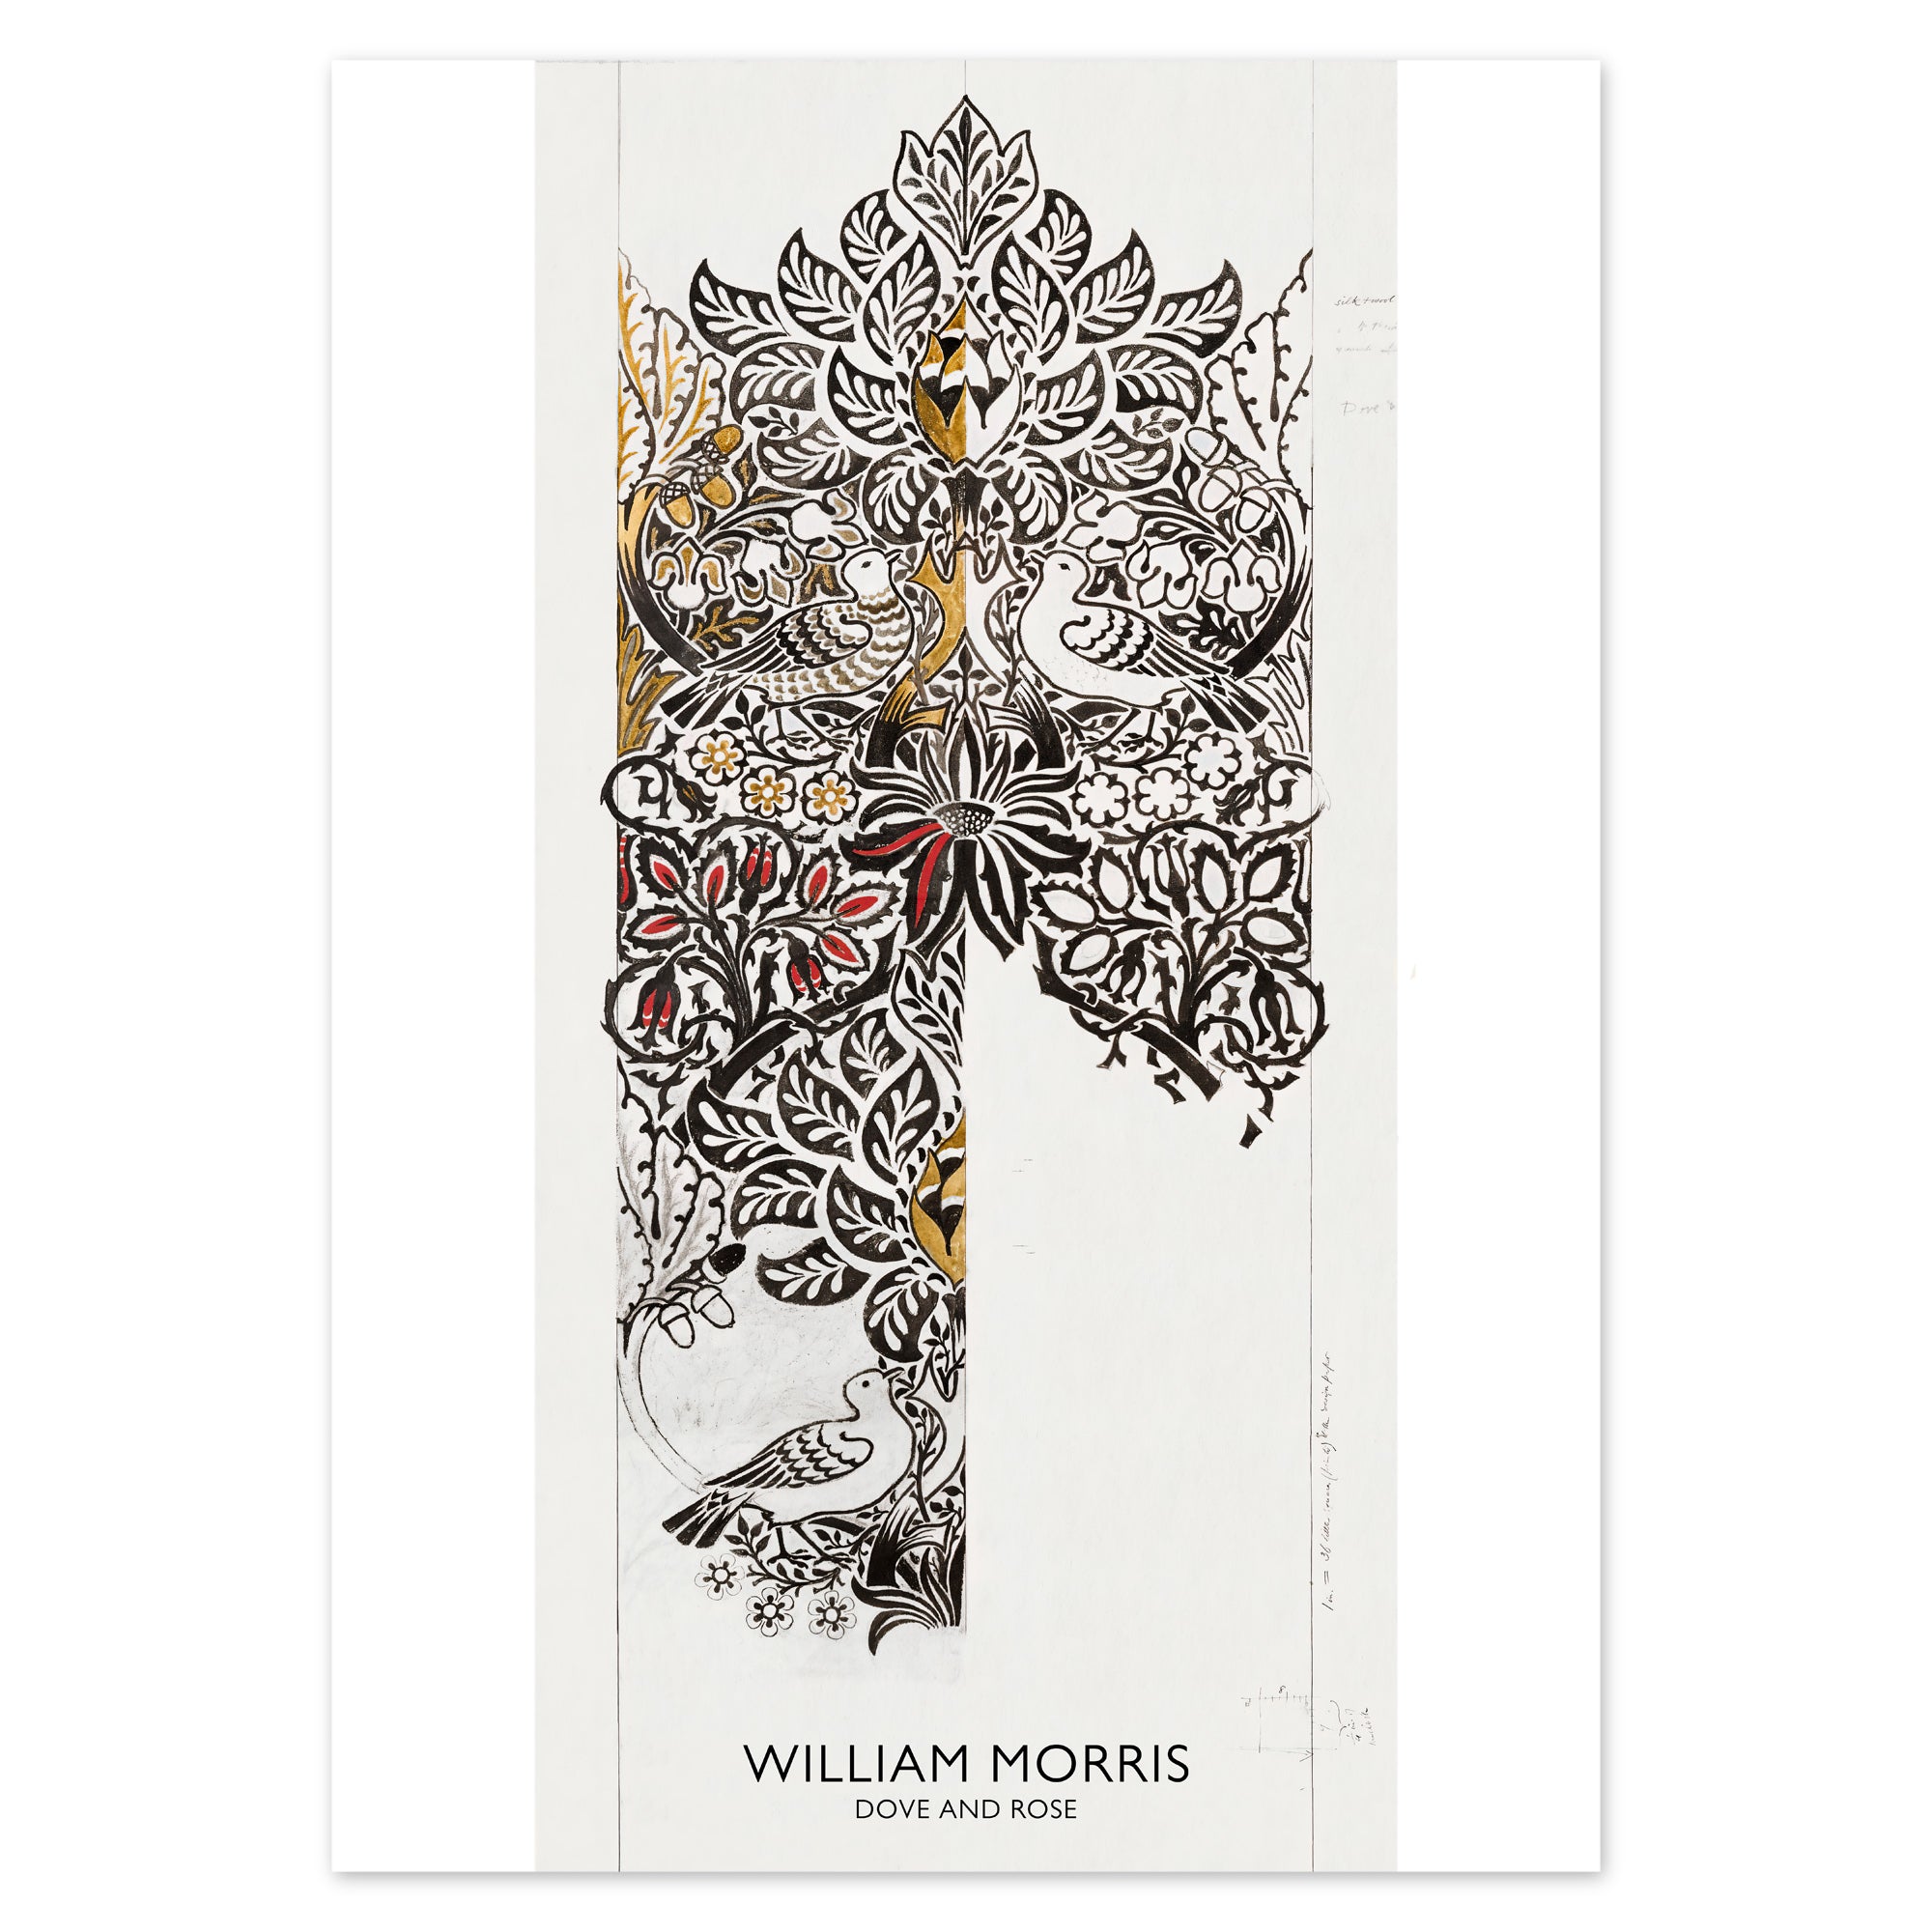 William Morris Poster - Dove and Rose